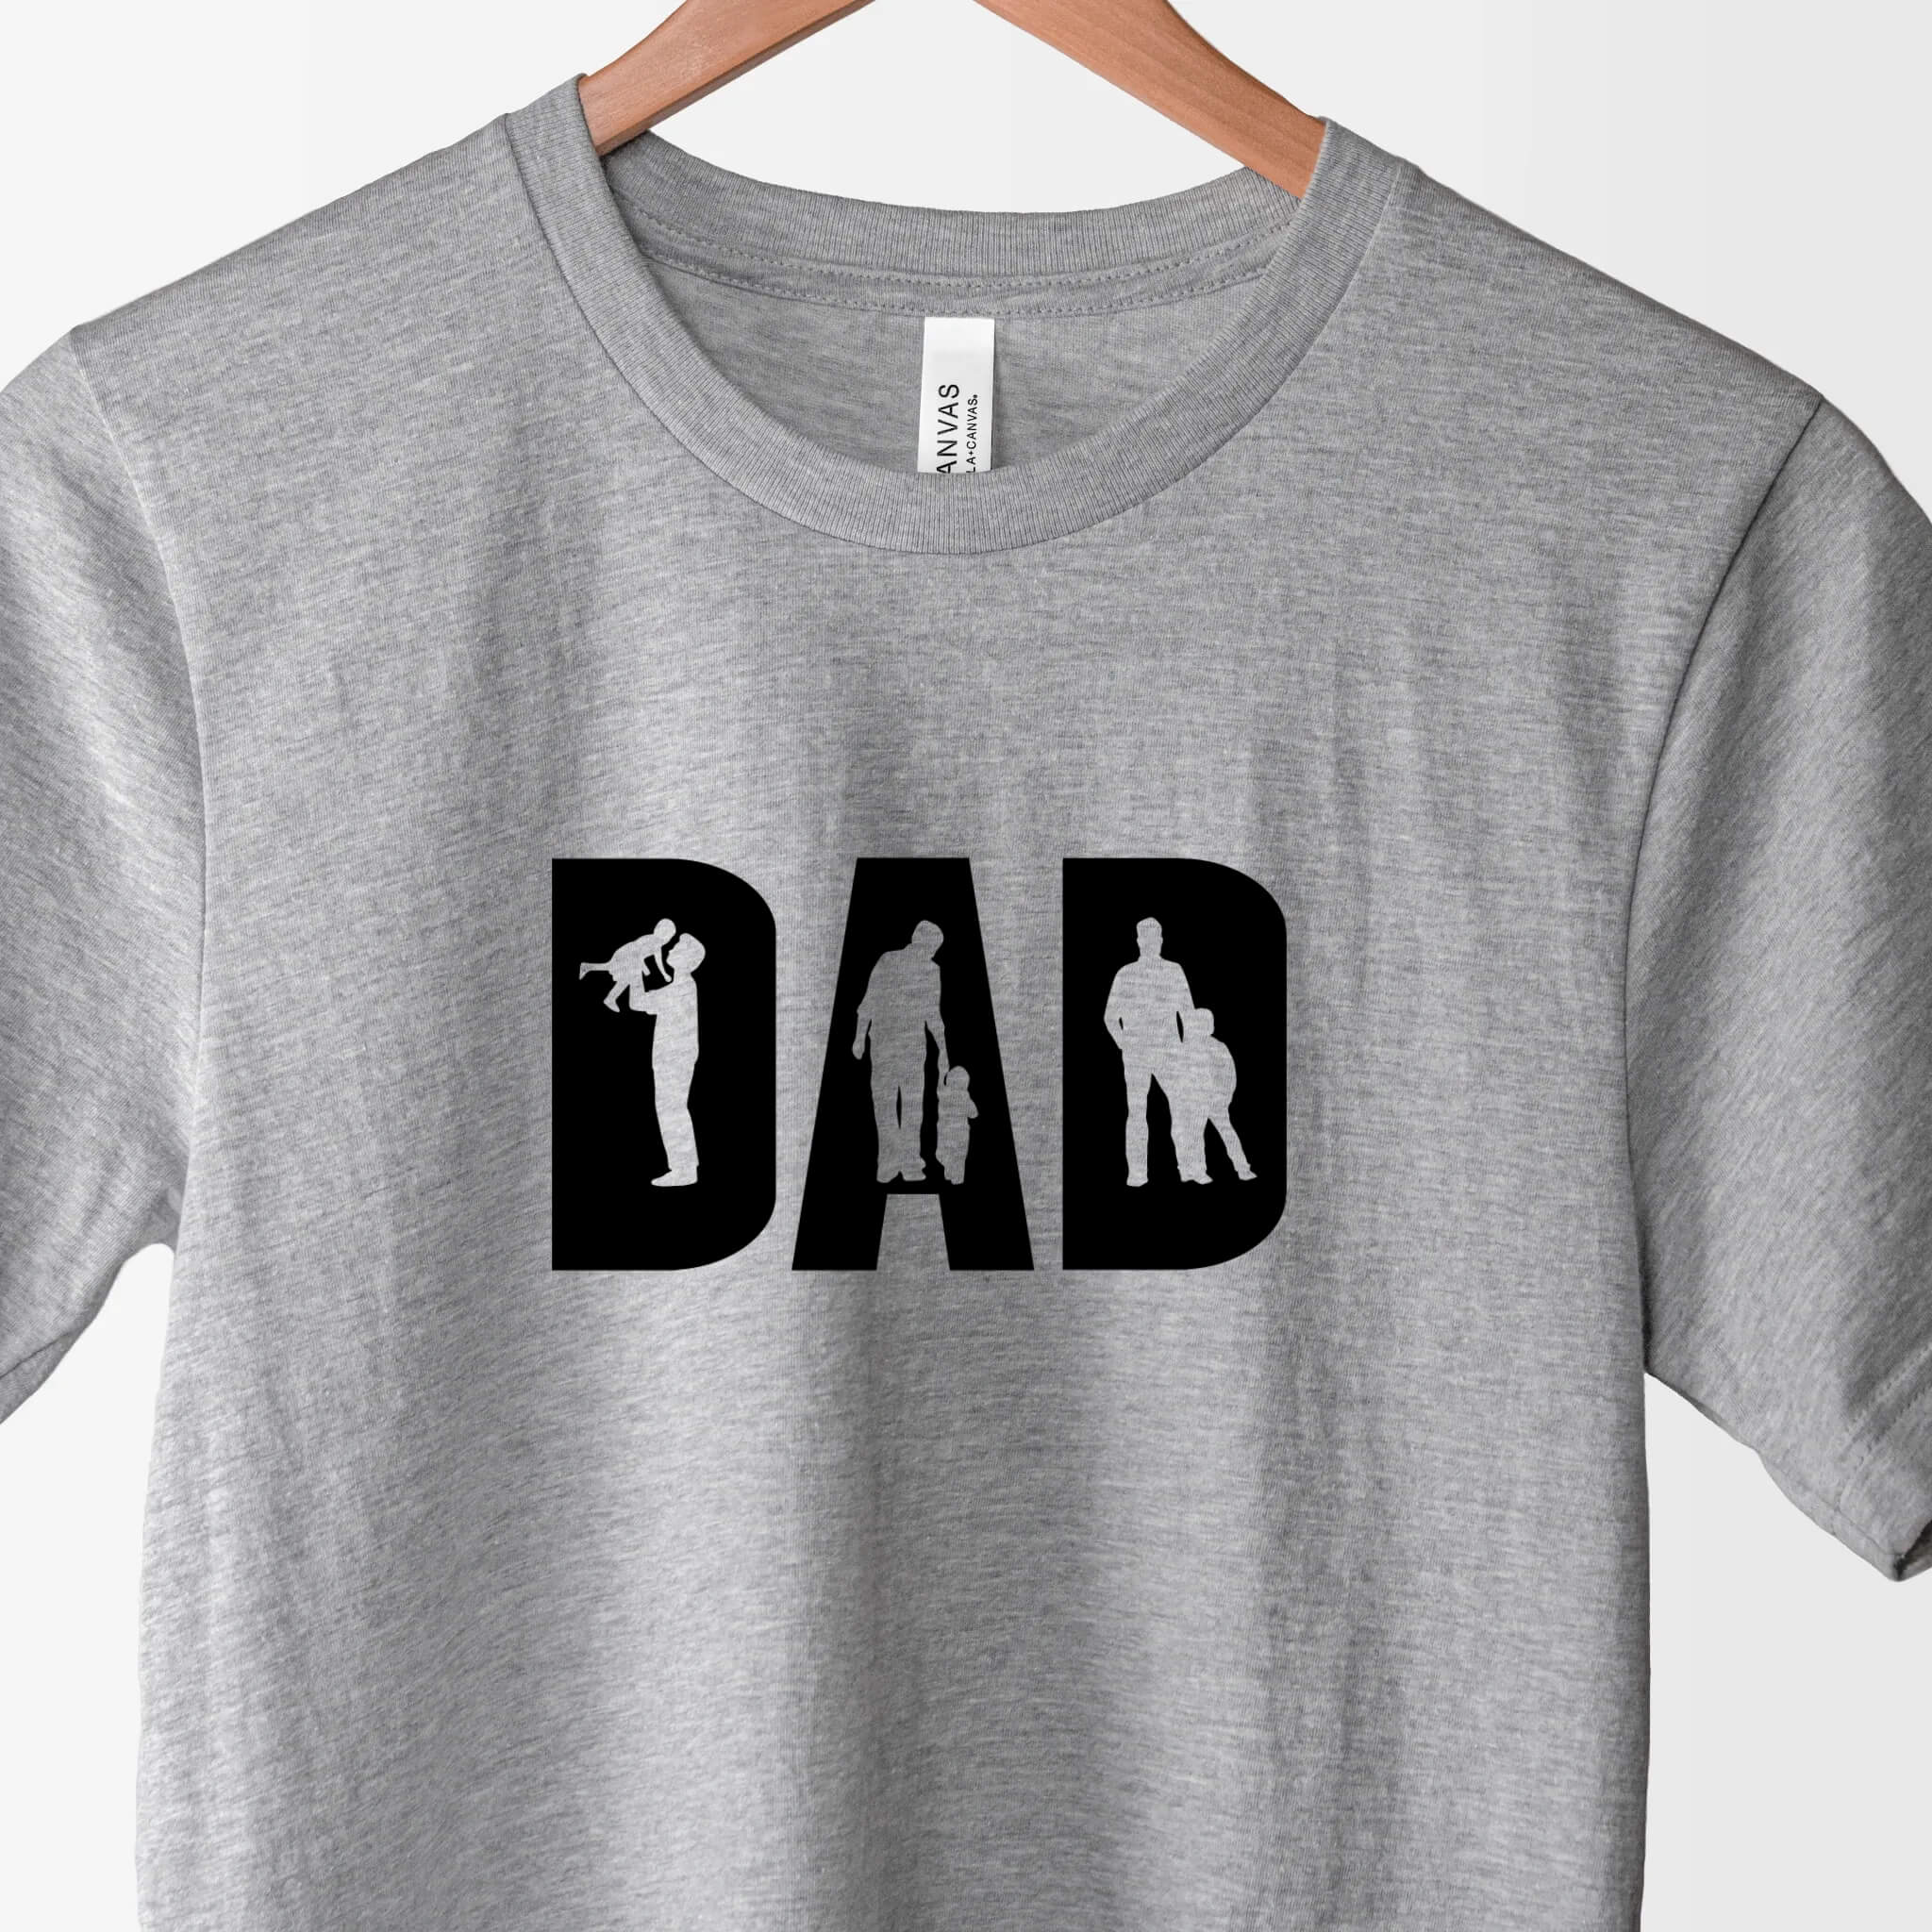 Father's Day - Dad Fatherhood Children Graphic Print T-shirt